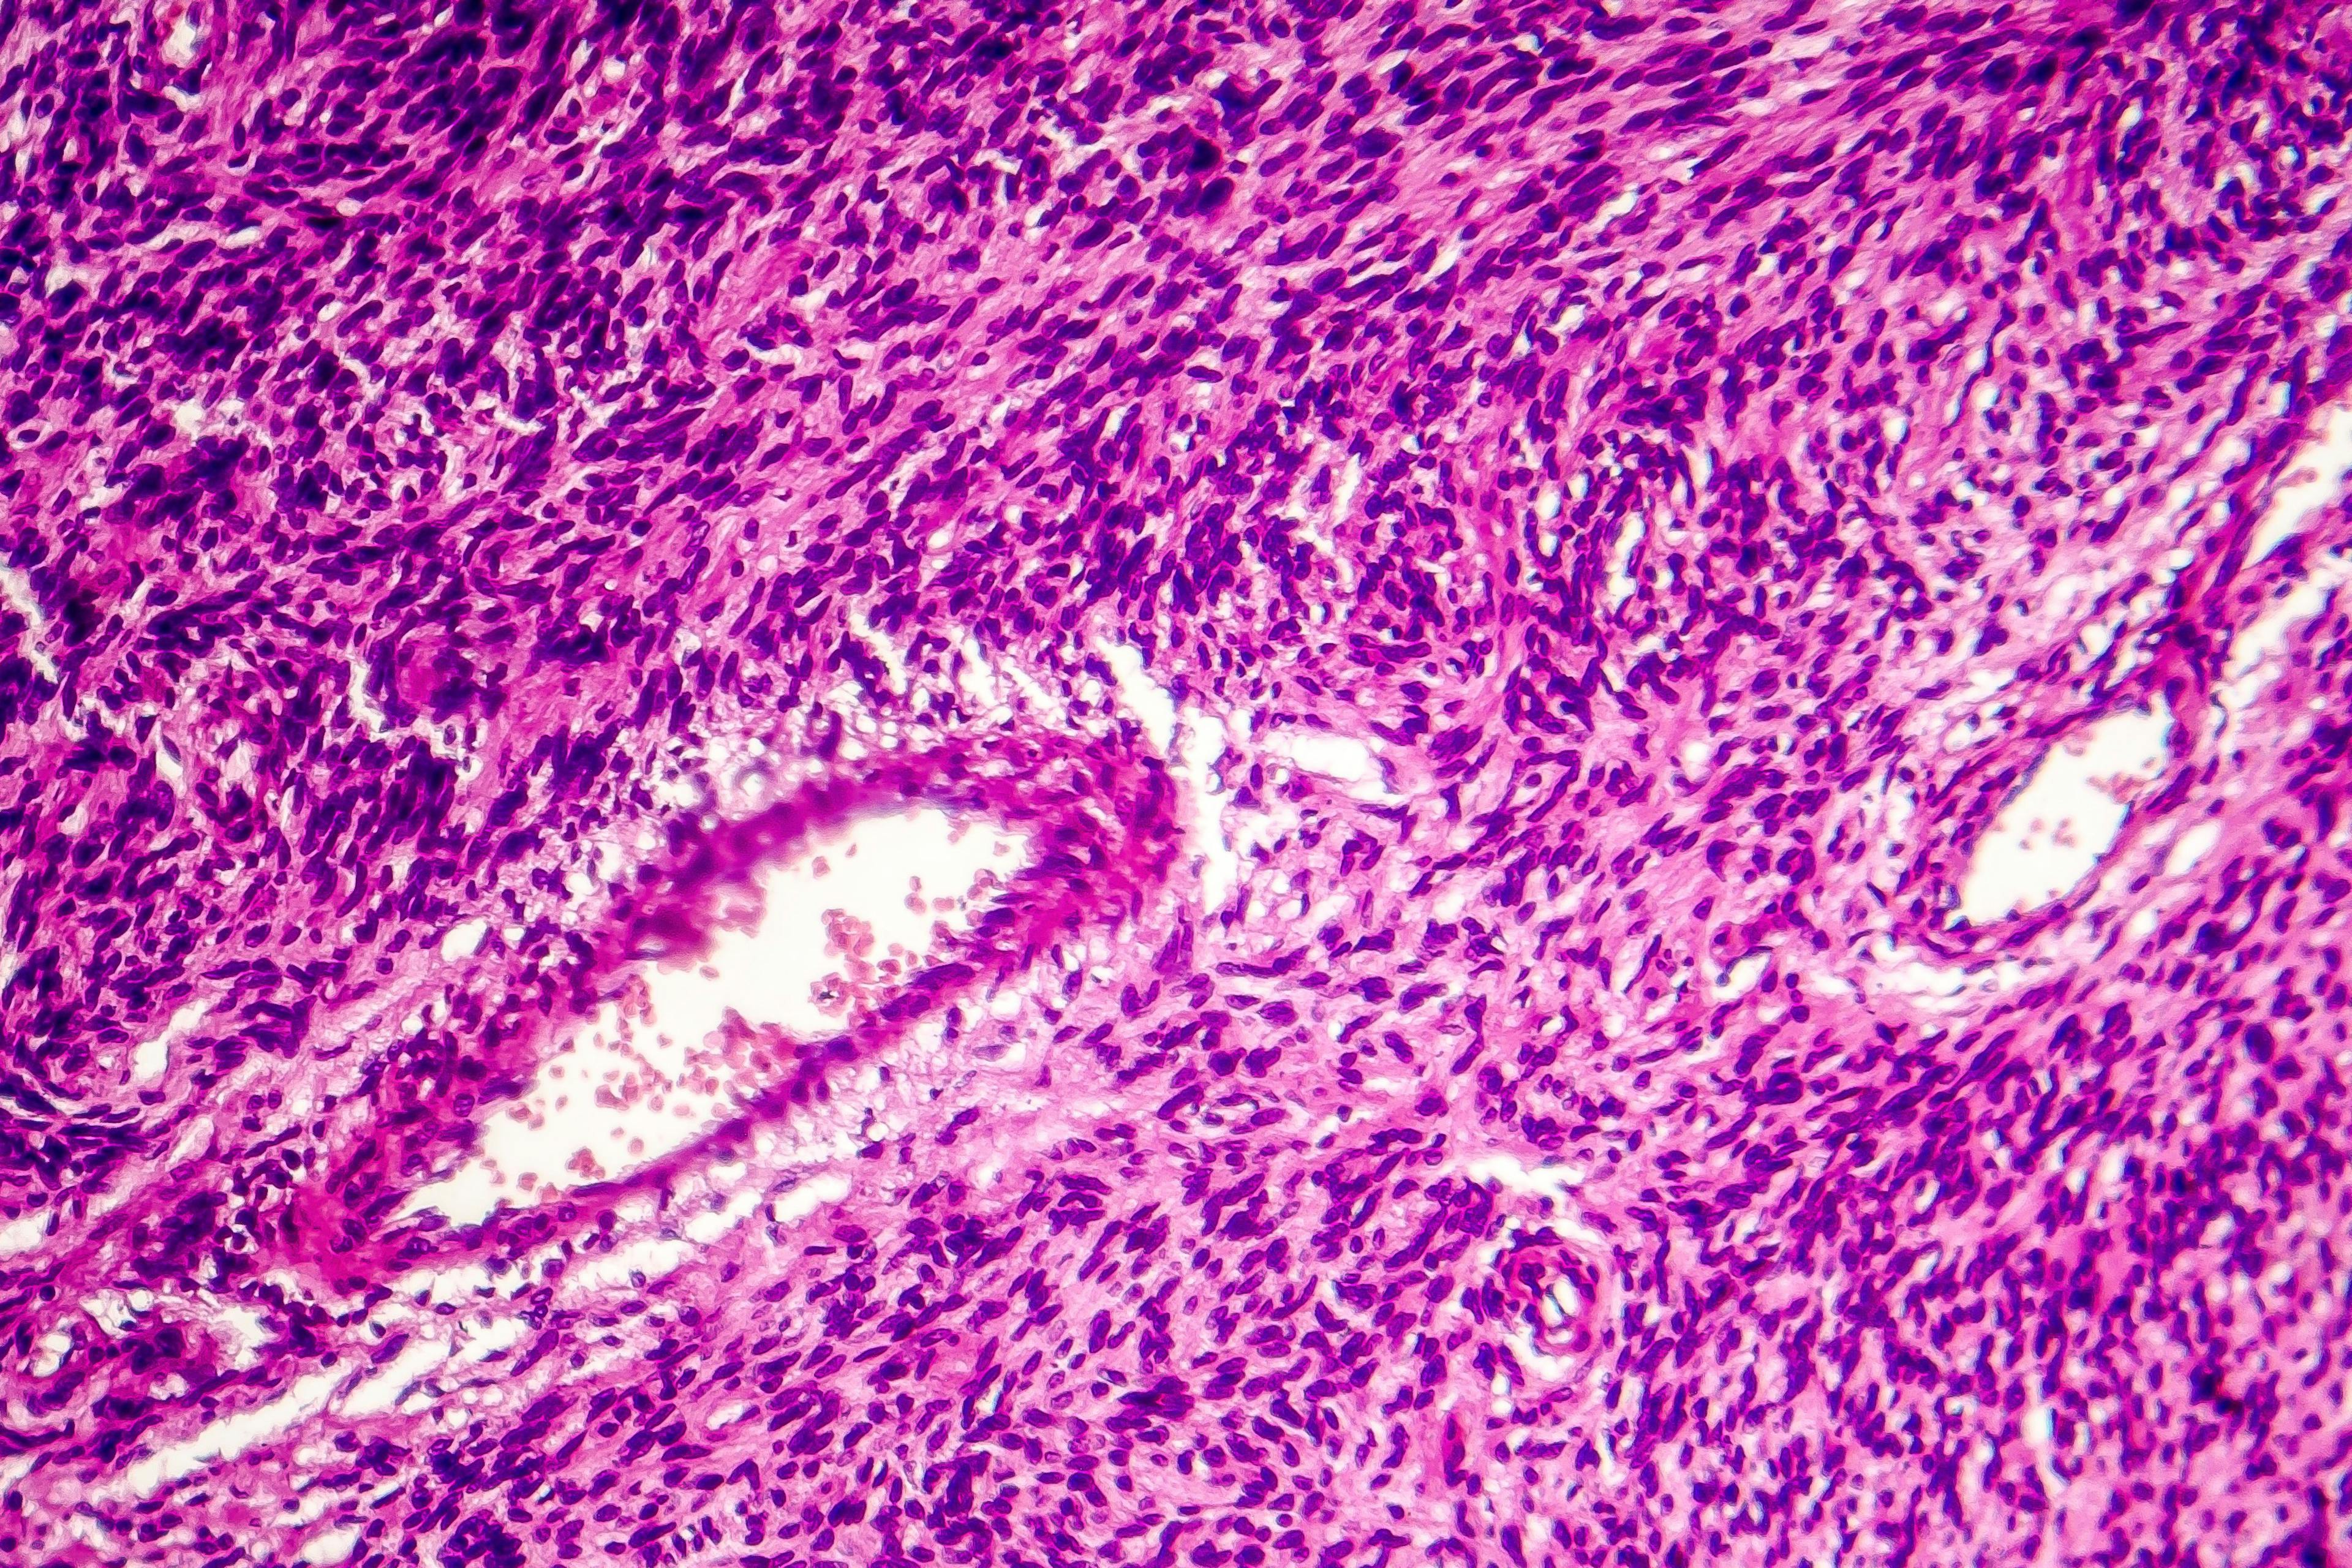 Fibrosarcoma, malignant tumor of fibroblasts, one of soft tissue sarcomas, light micrograph, photo under microscope - Image Credit: © Dr_Microbe|  [stock.adobe.com]